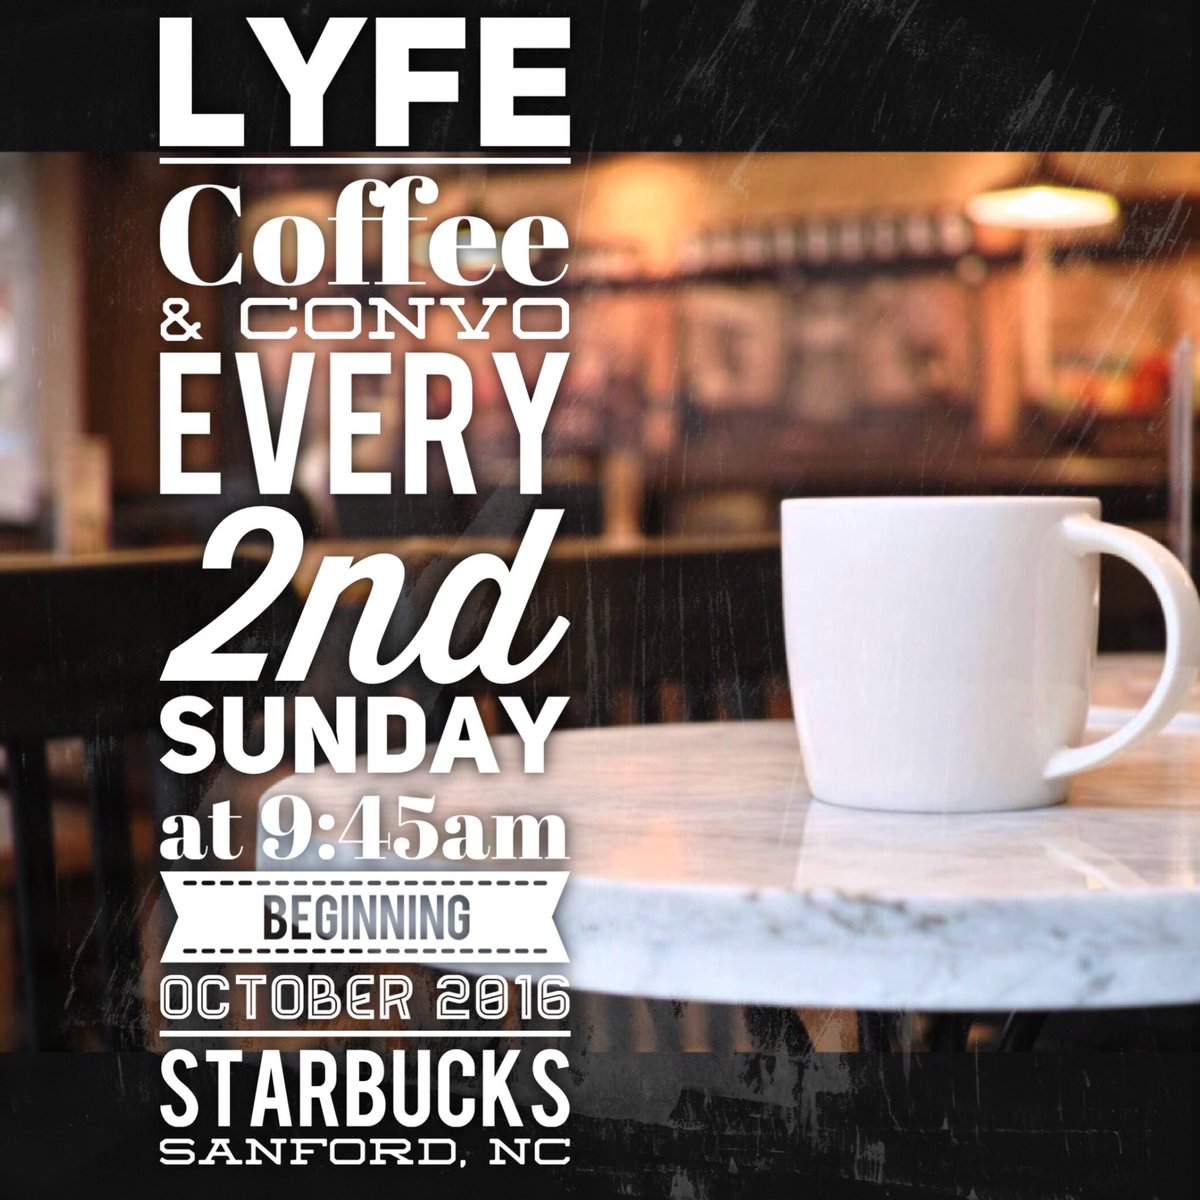 LYFE Coffee and Convo beginning Oct 2016! #coffeeandconvo #cpmnc #livingyourfaitheveryday #LYFE